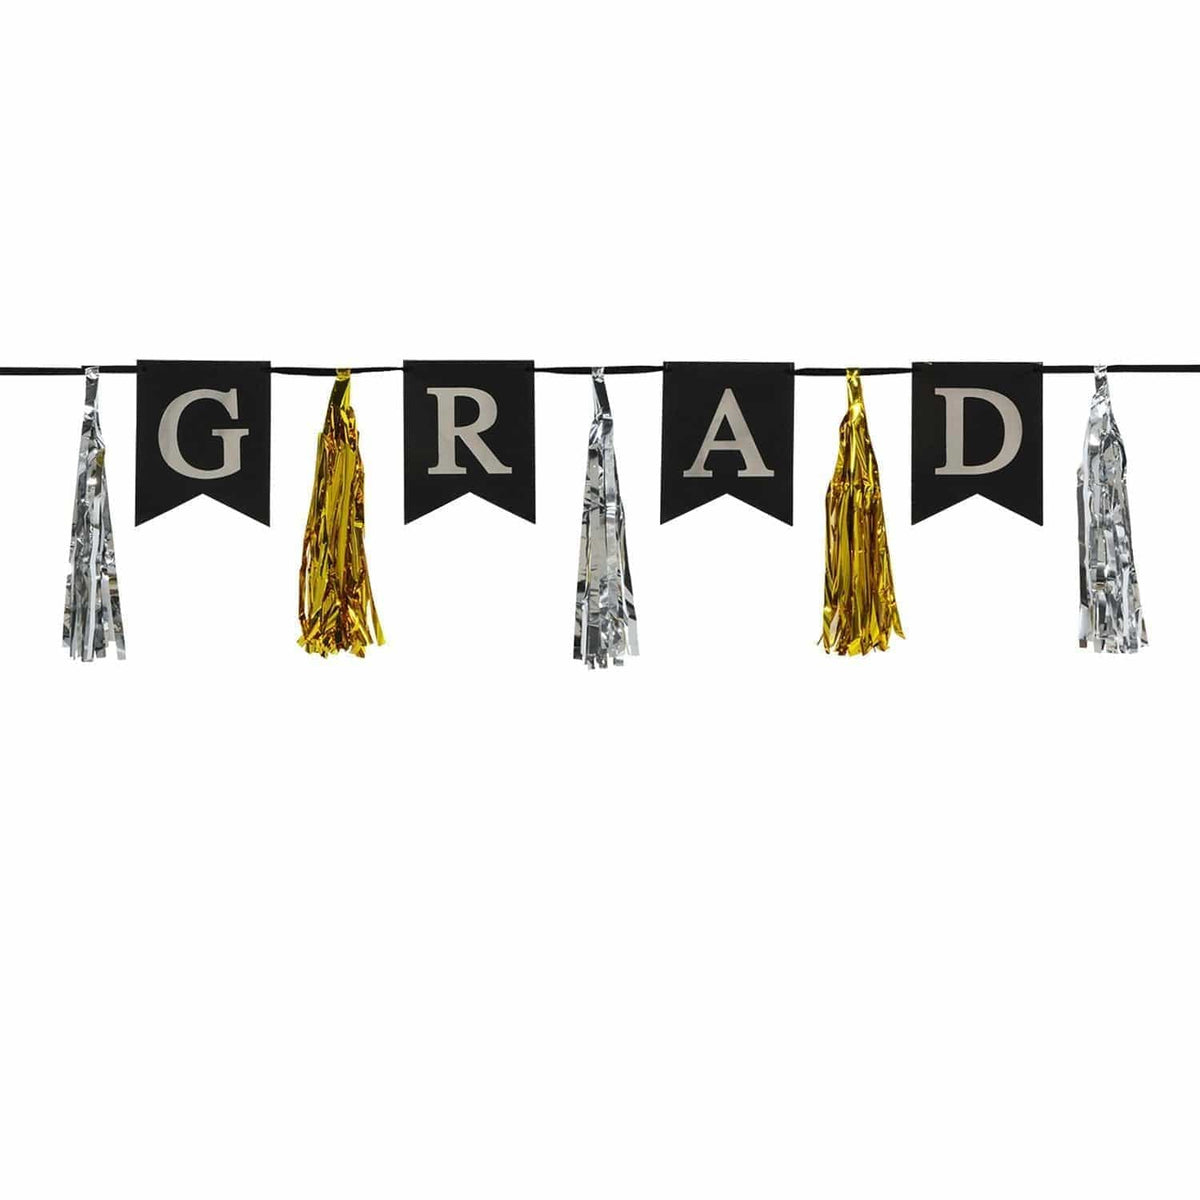 BEISTLE COMPANY Graduation Graduation Tassel Garland "Grad", 13" x 78", Black, Silver and Gold